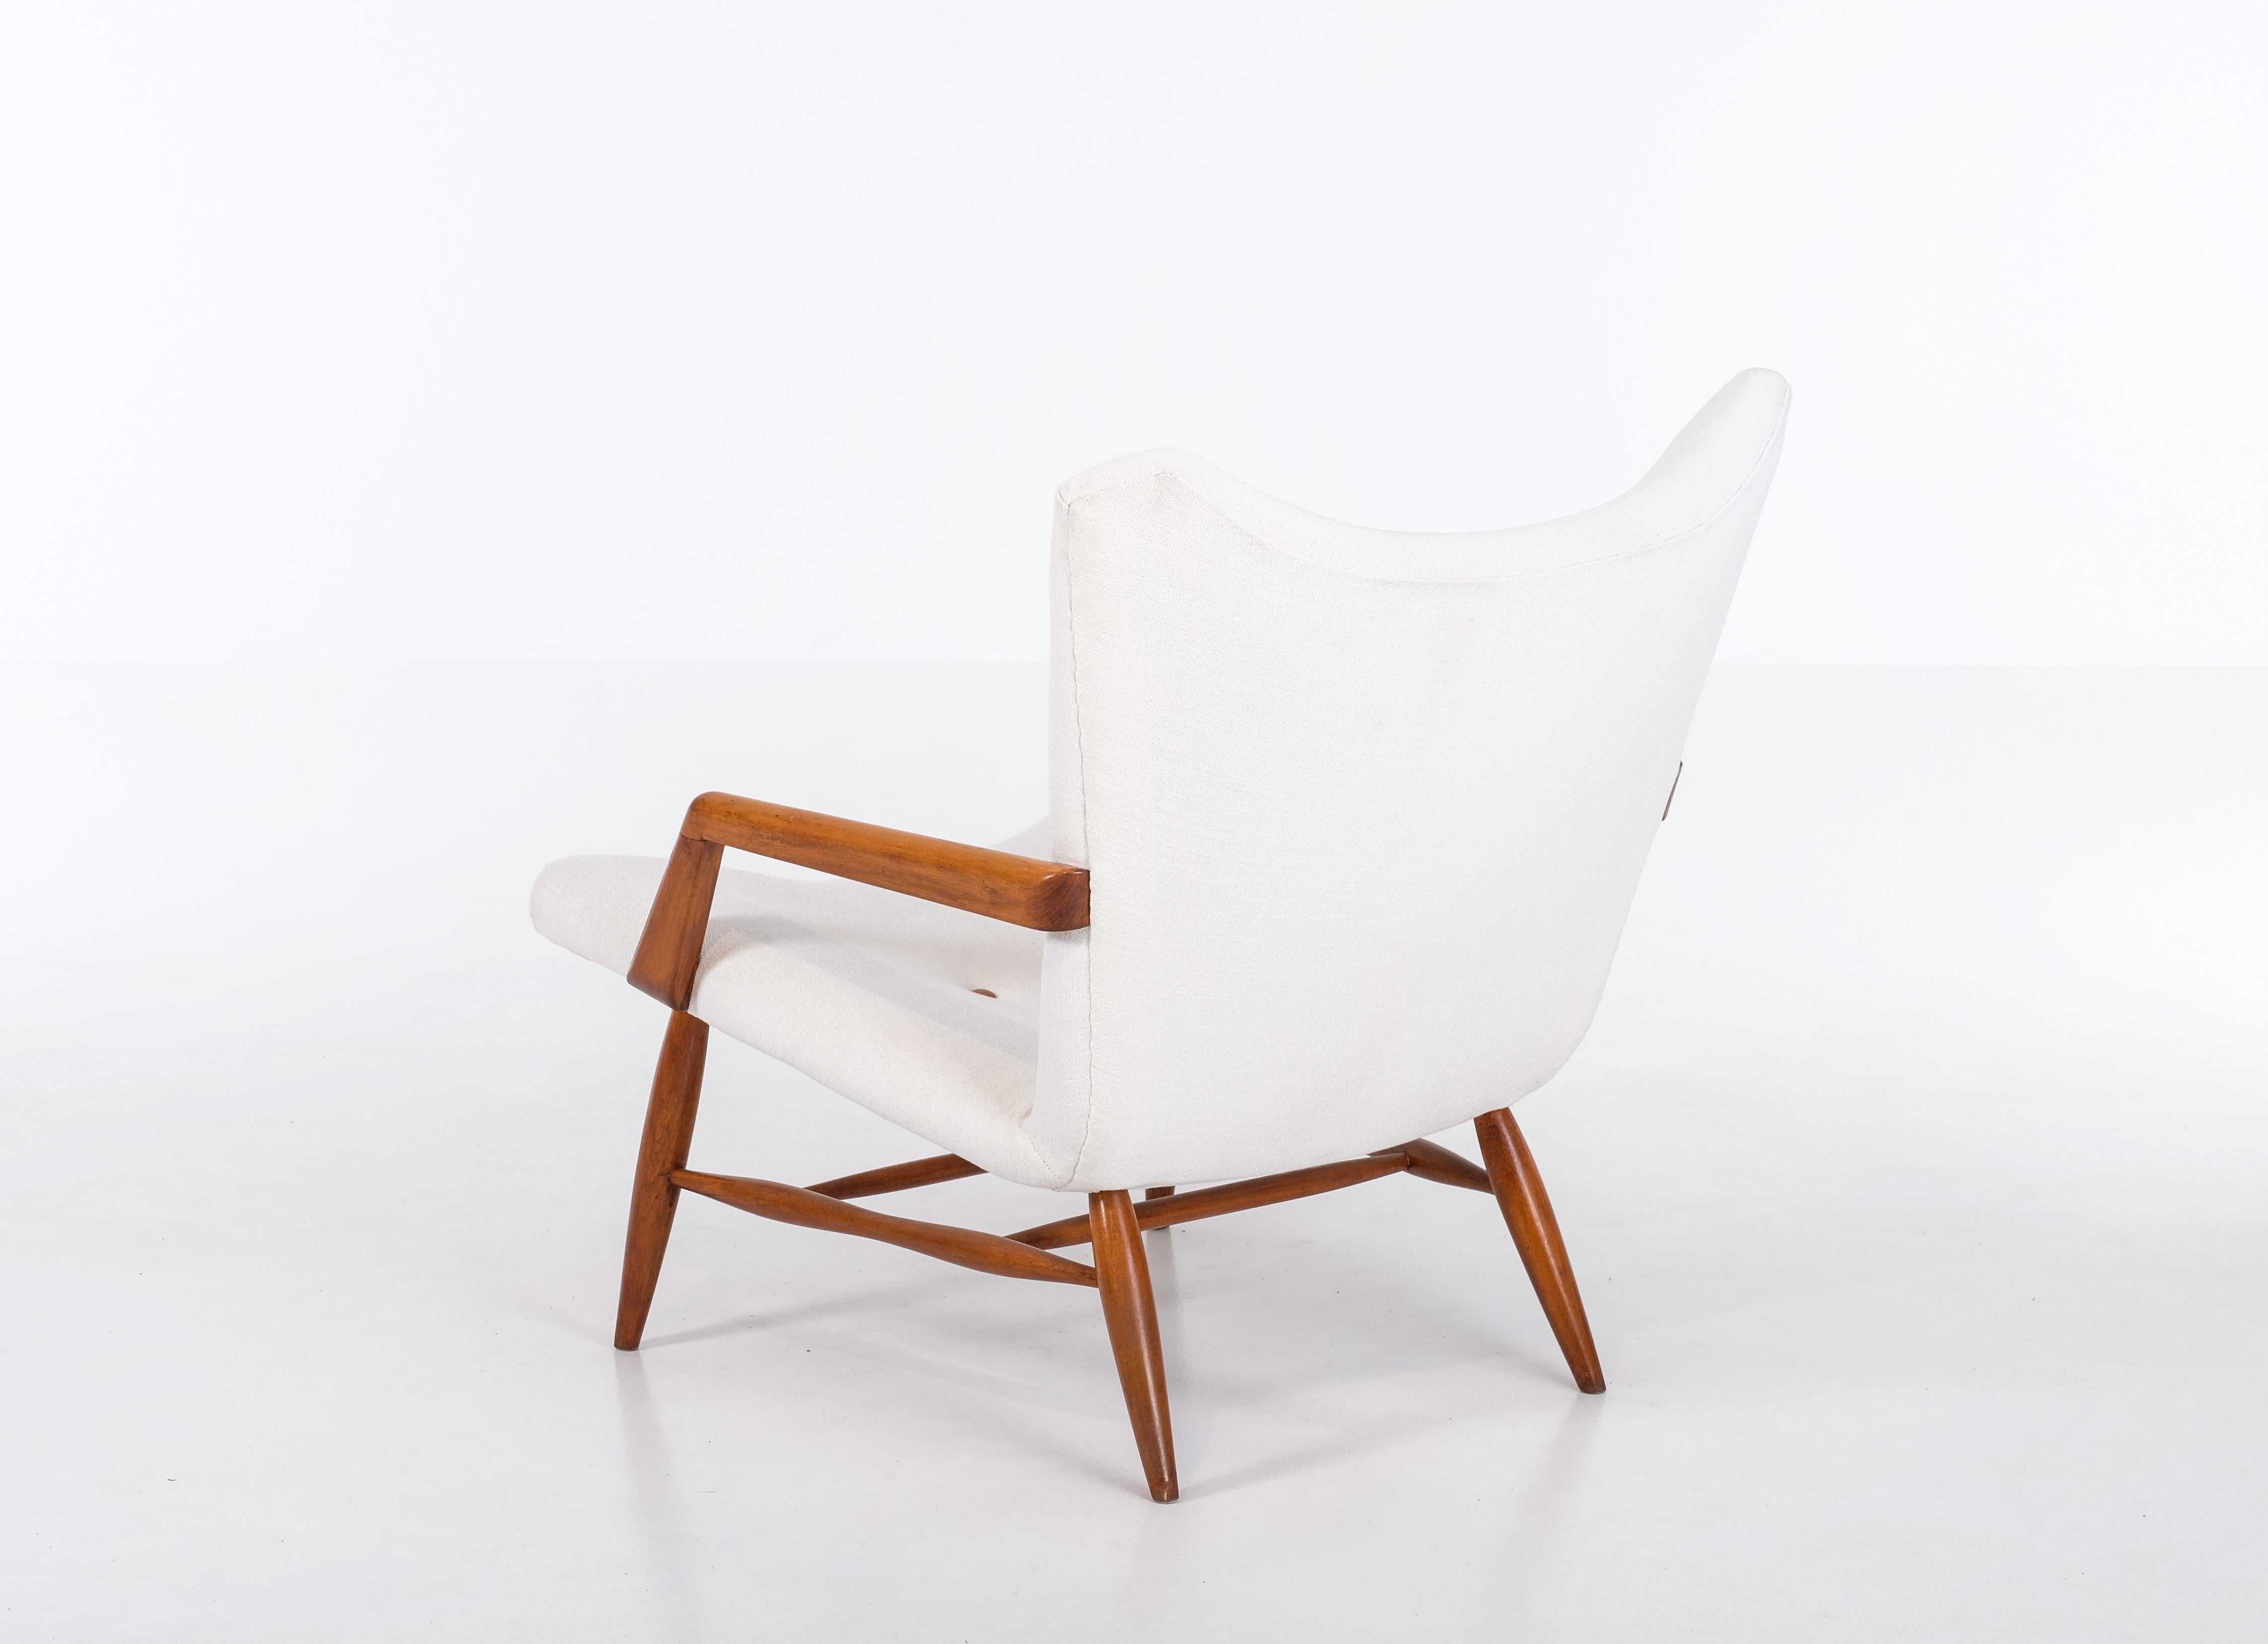 Mahogany Rare Swedish Easy Chair by Svante Skogh, 1950s For Sale